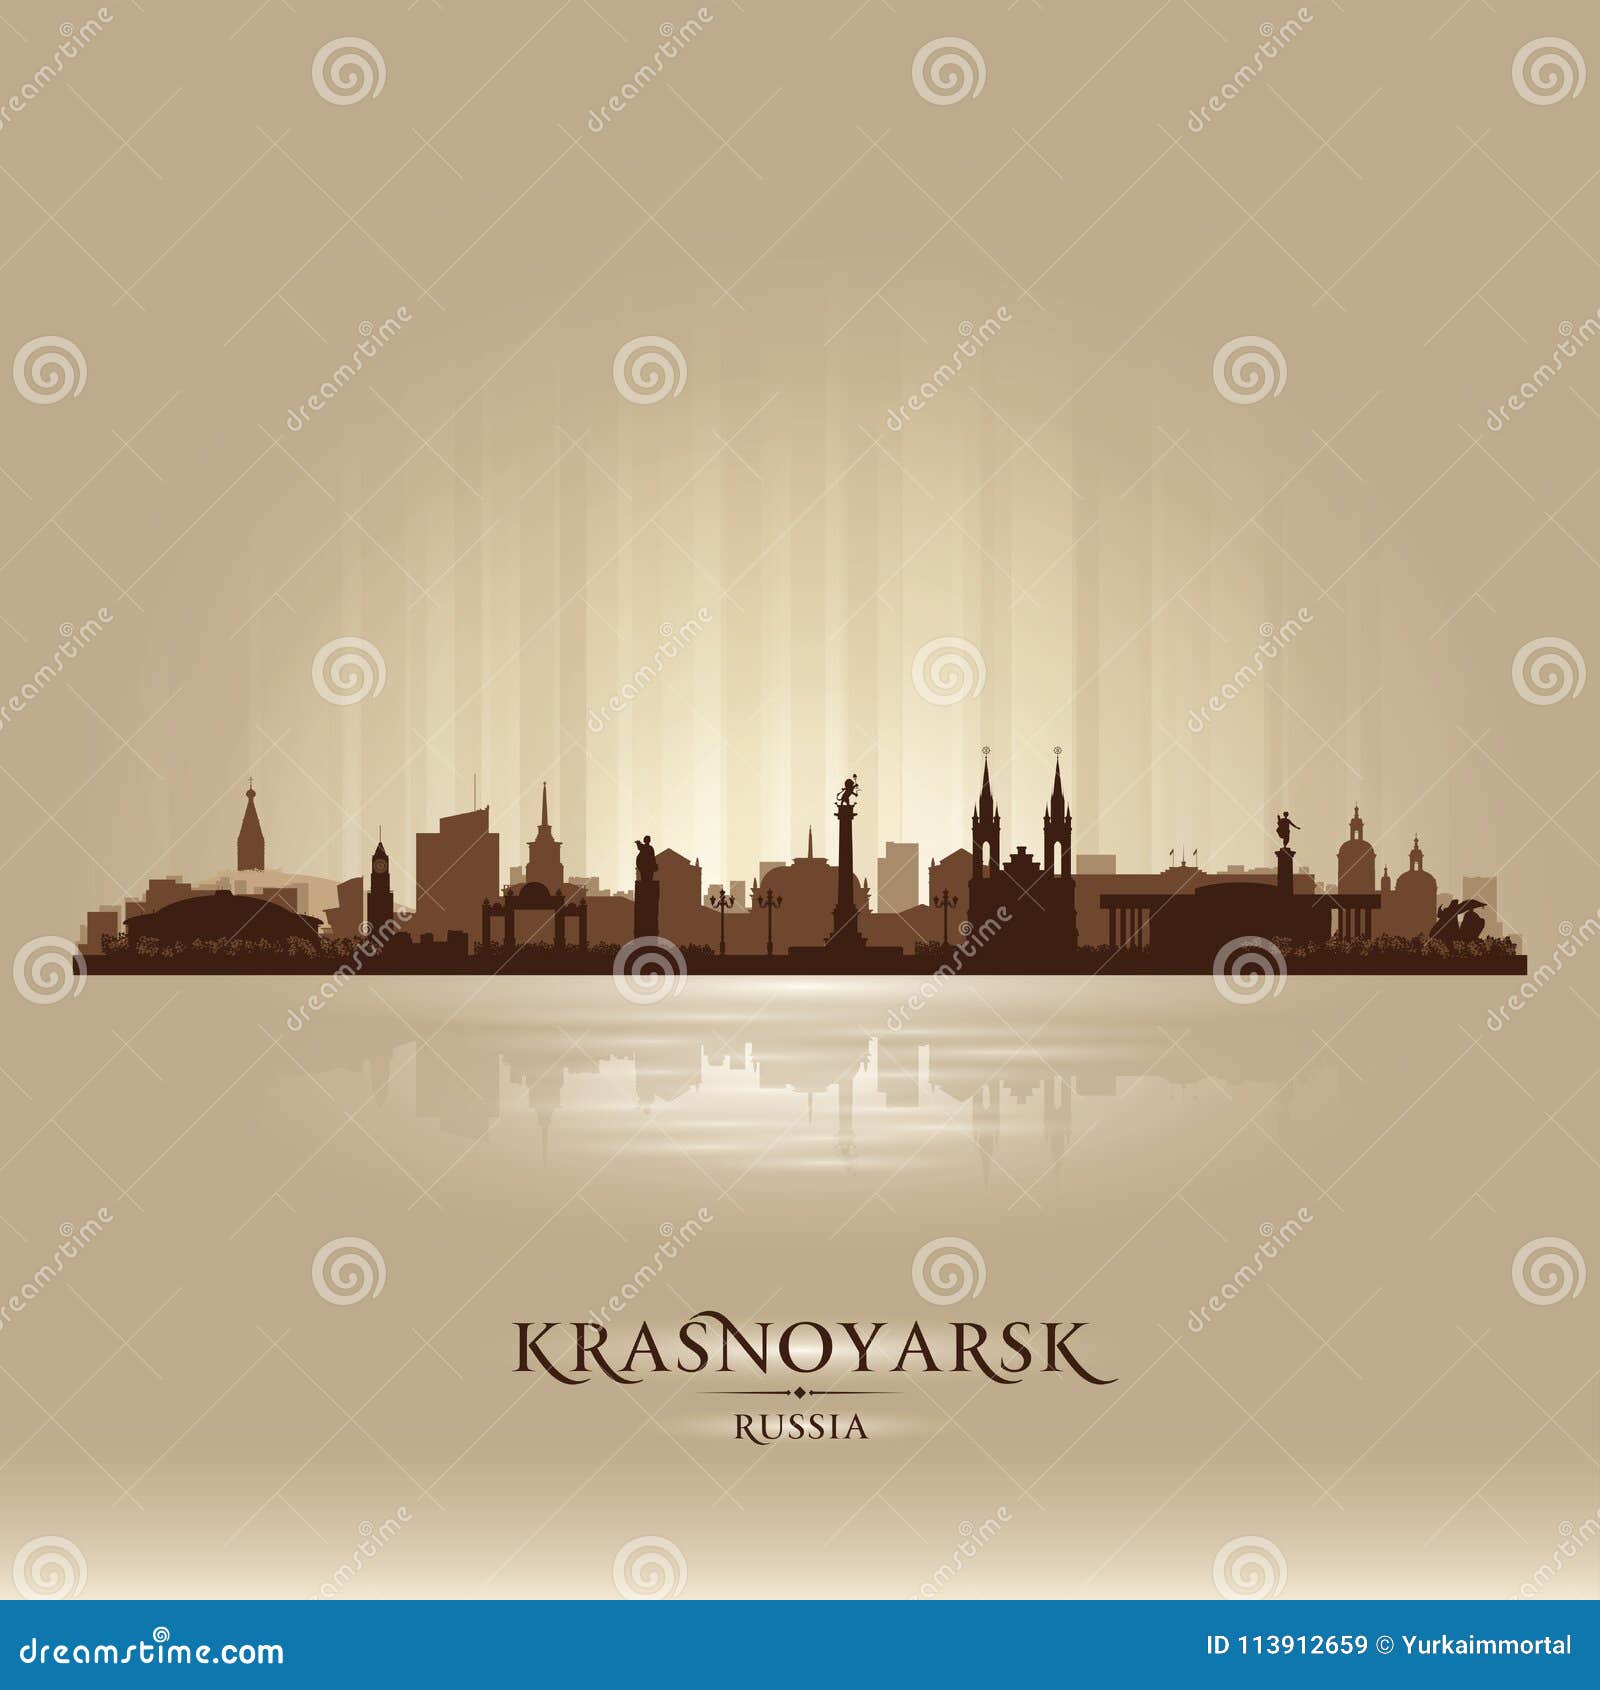 Krasnoyarsk Russia City Skyline Vector Silhouette | CartoonDealer.com